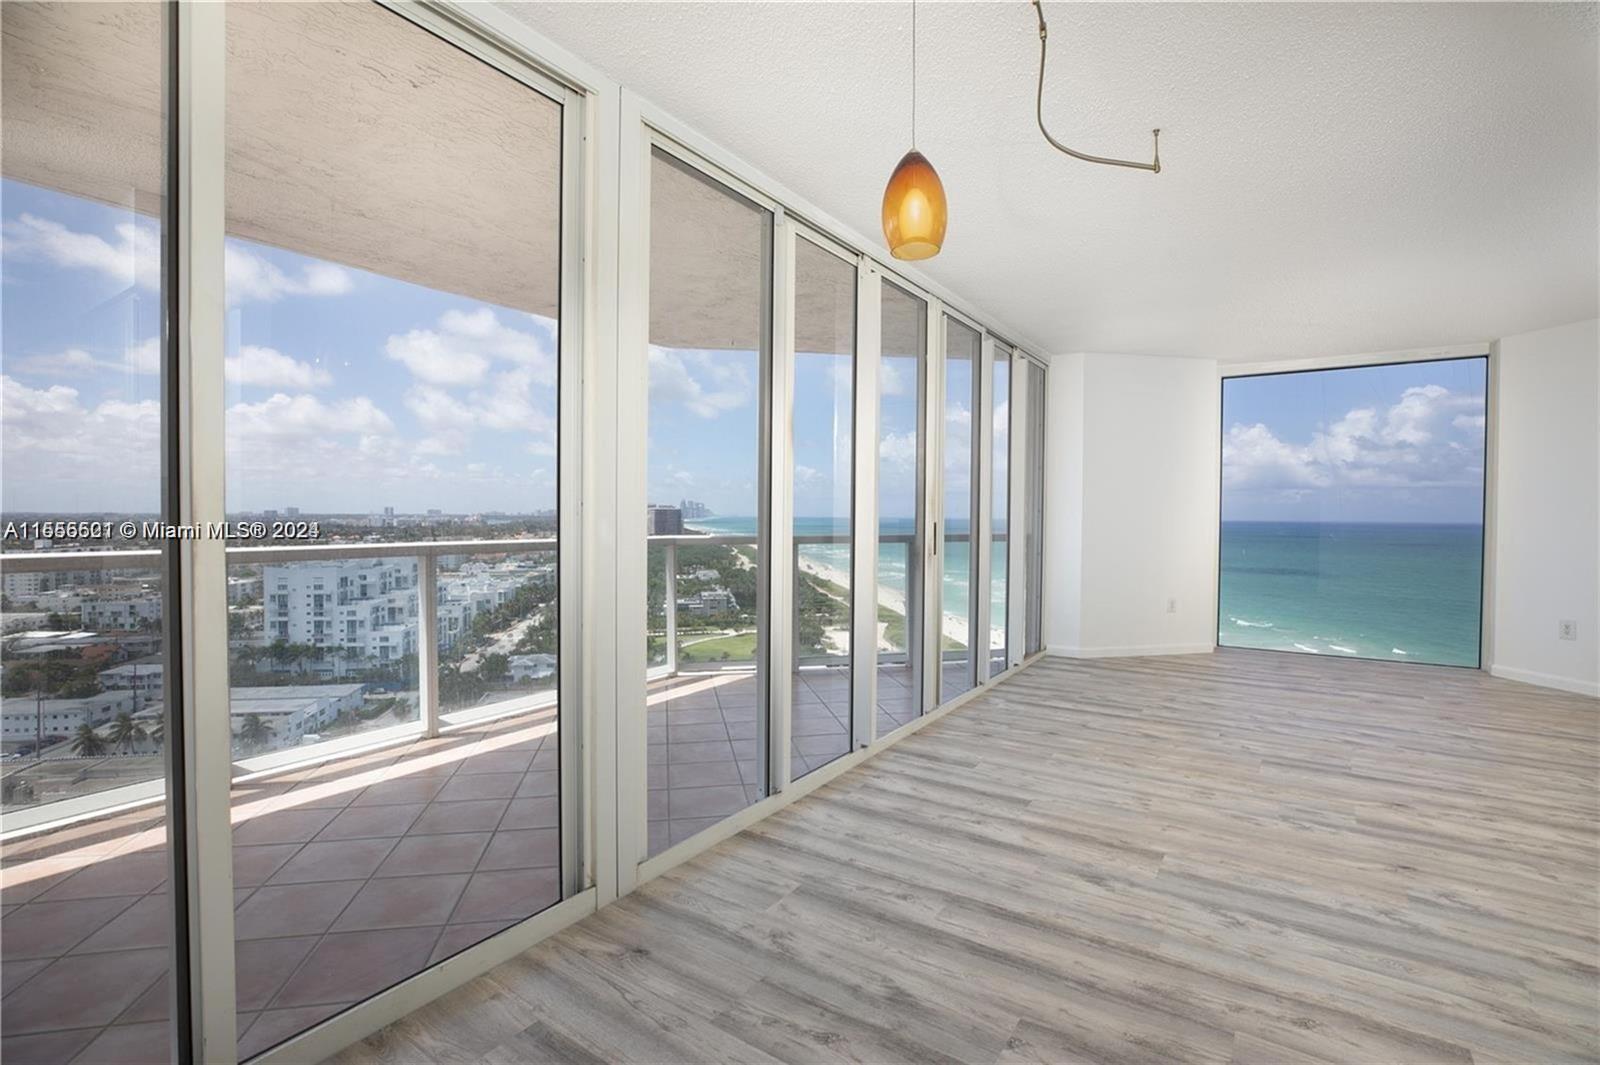 Property for Sale at 7330 Ocean Ter 21-D, Miami Beach, Miami-Dade County, Florida - Bedrooms: 2 
Bathrooms: 2  - $1,565,000